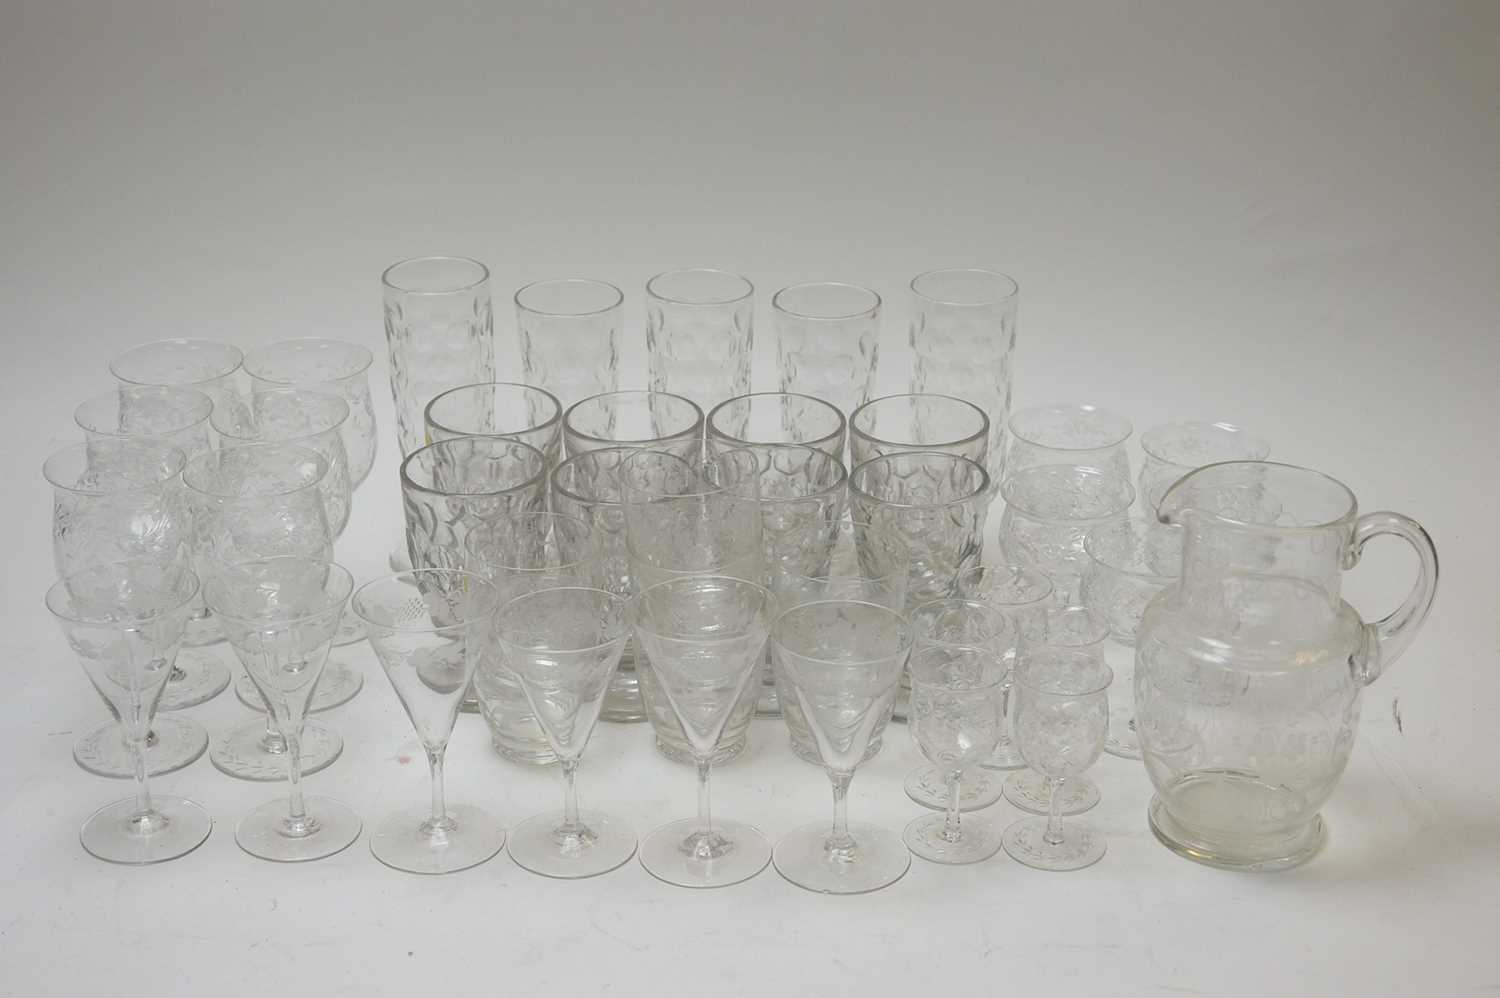 Lot 240 - Mixed glassware